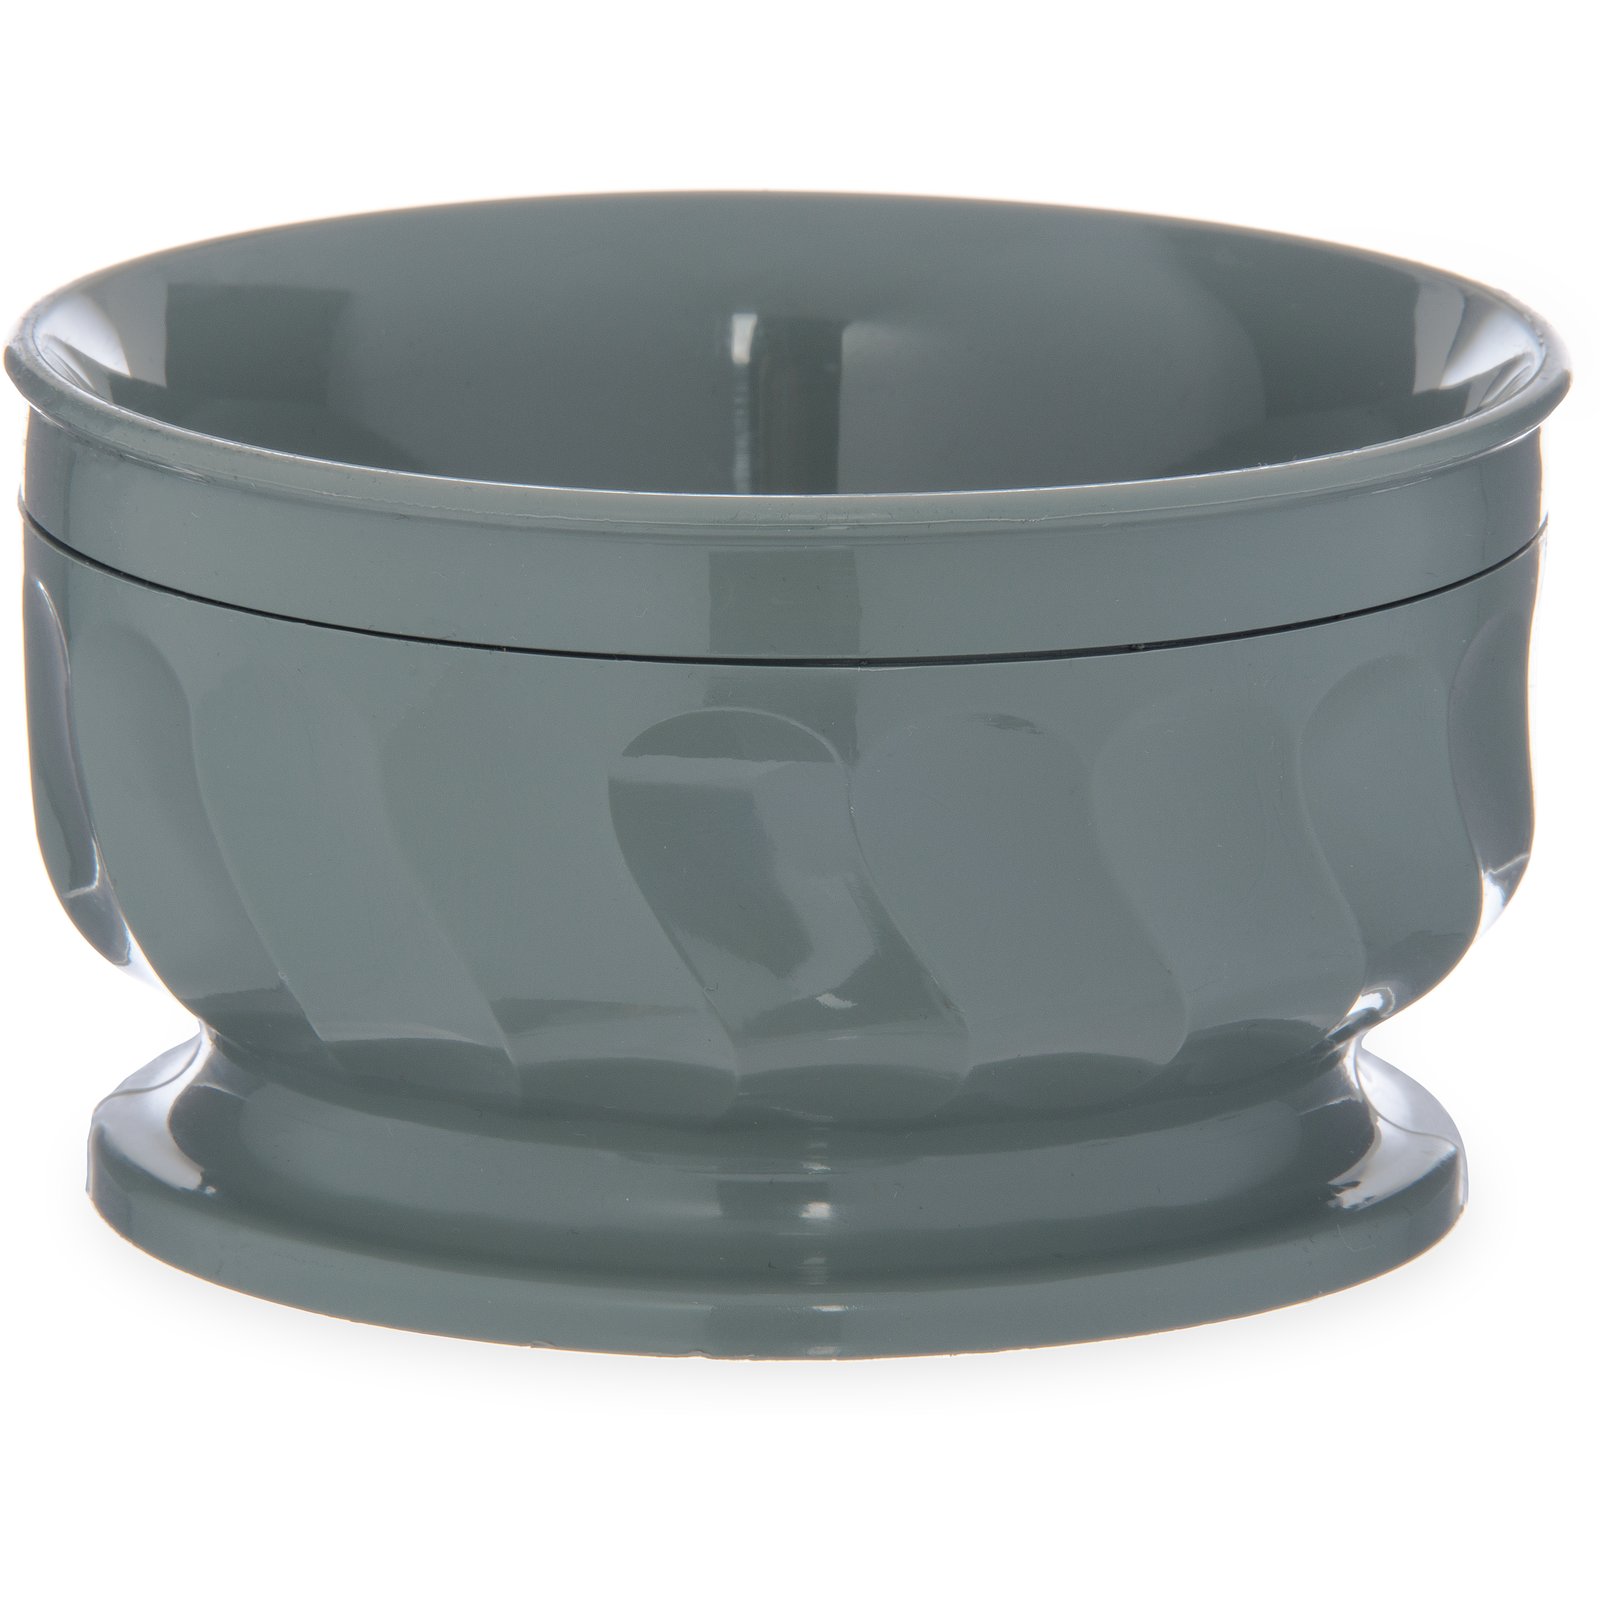 DX330084 - Turnbury® Insulated Pedestal Based Bowl 9 oz (48/cs